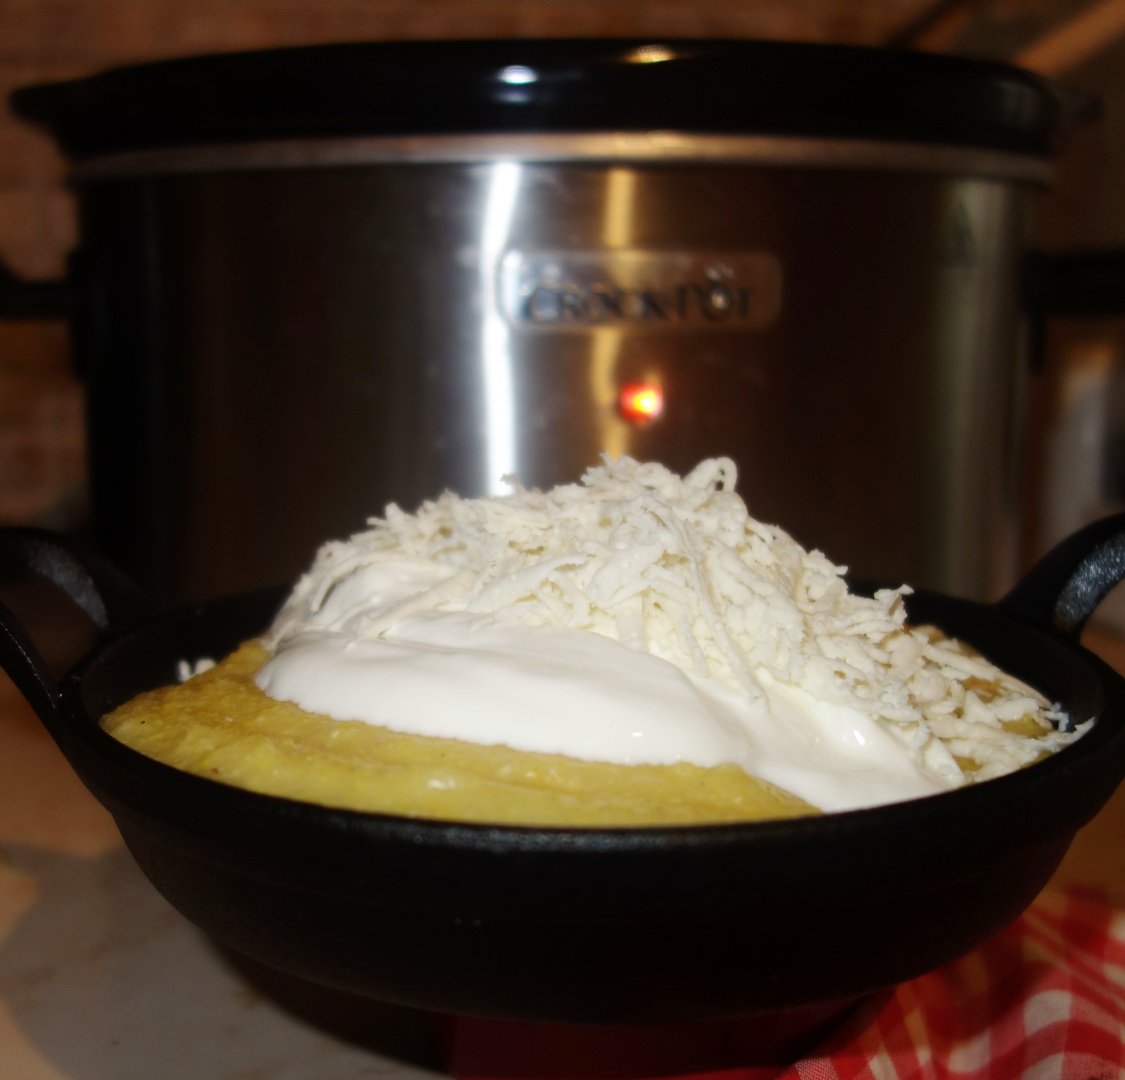 Mamaliguta cu branza si smantana la slow cooker Crock-Pot